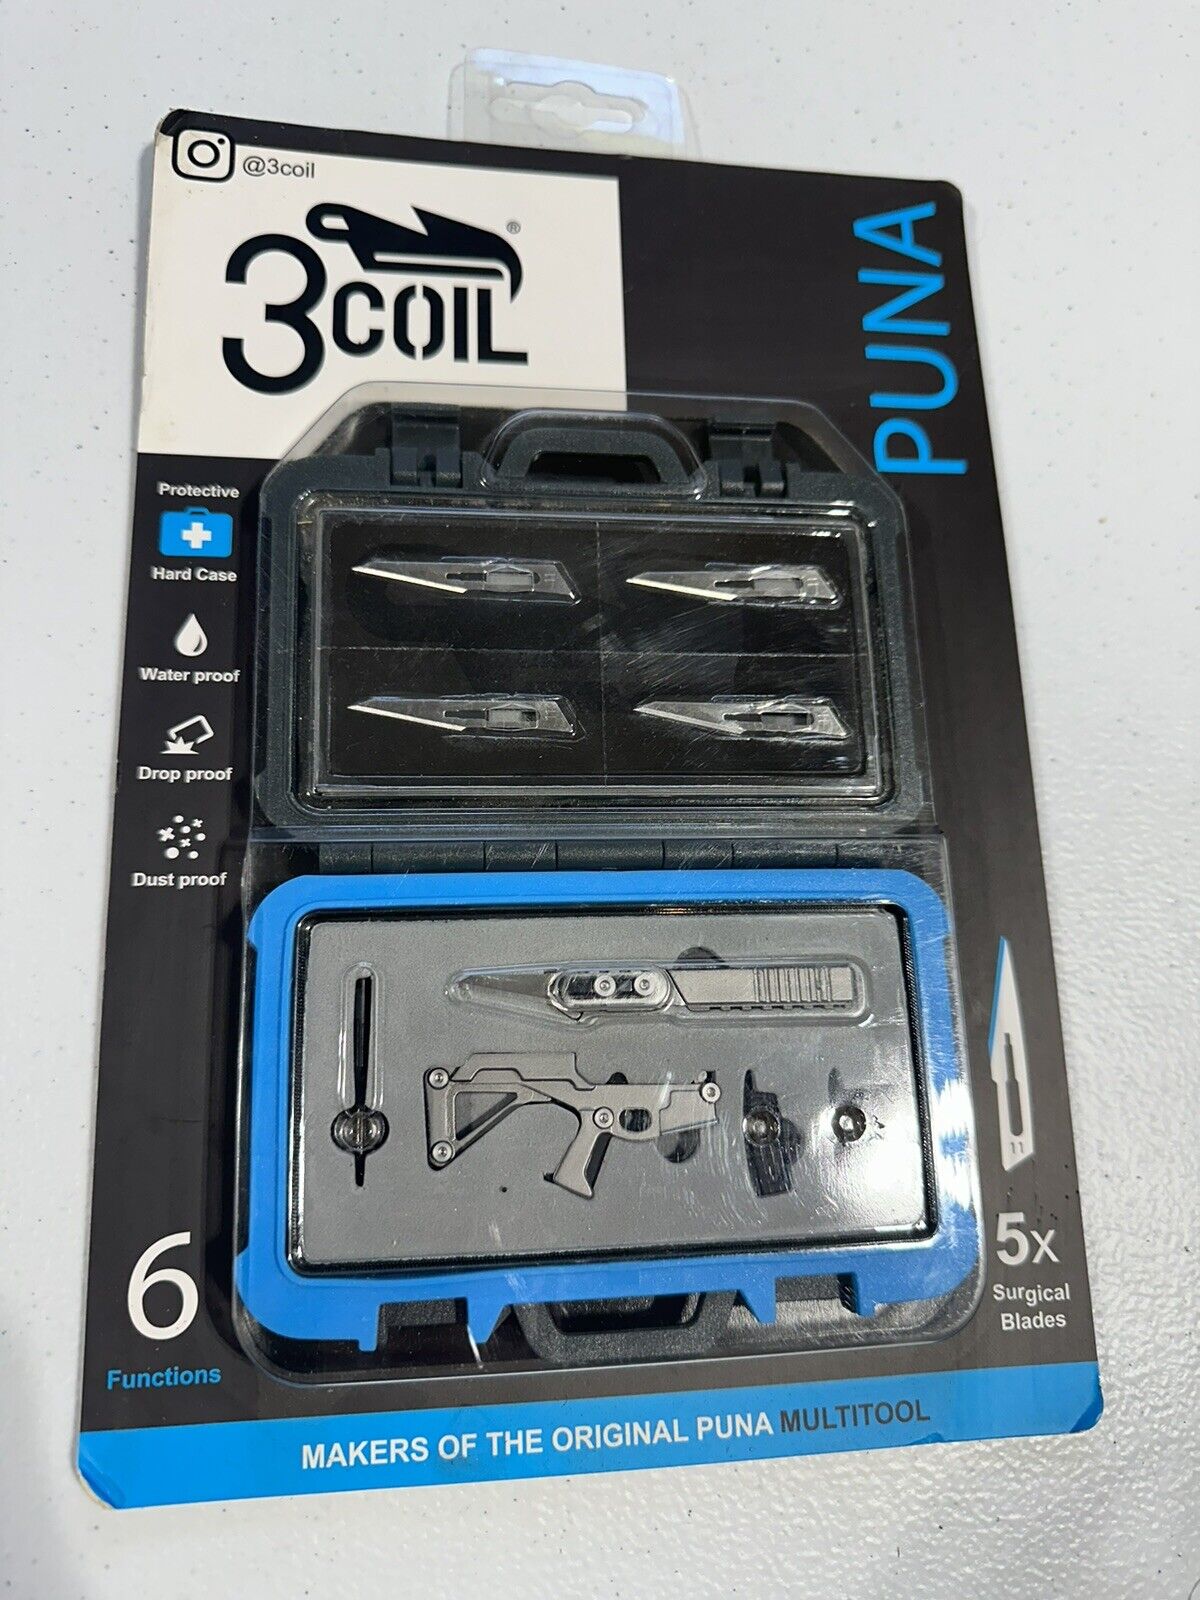 3Coil Puna 6-in-1 Multi-Tool with M2 cap head screw